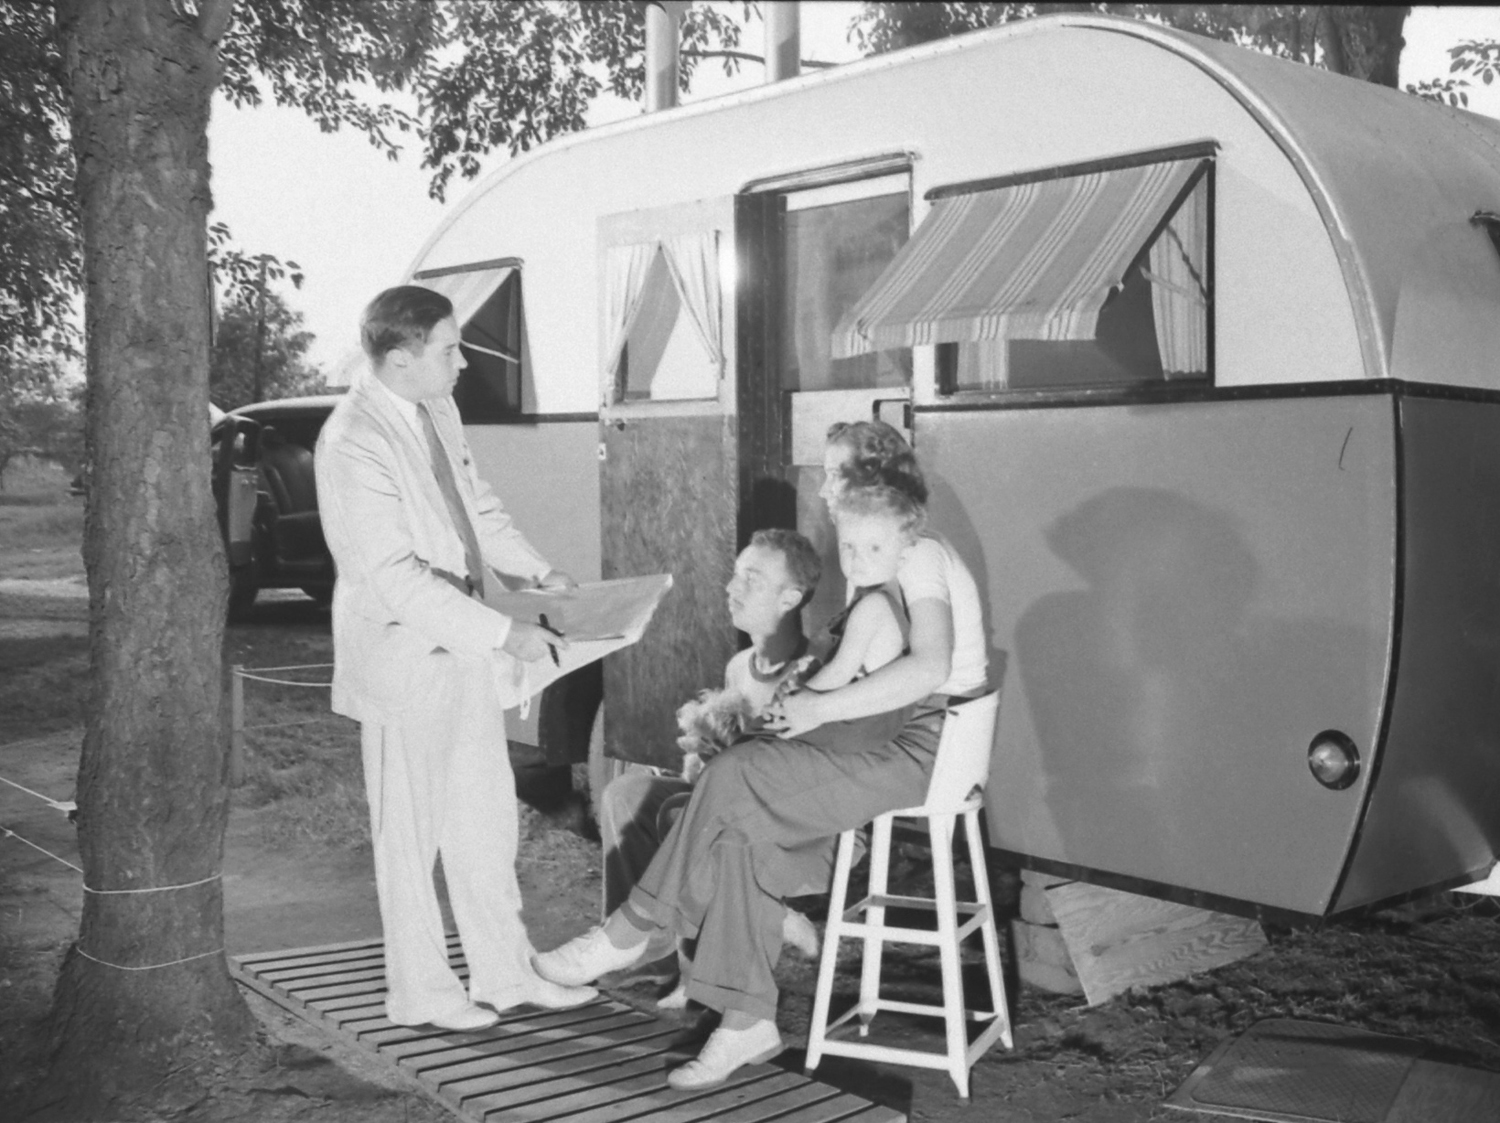 1940 census: Test in Indiana